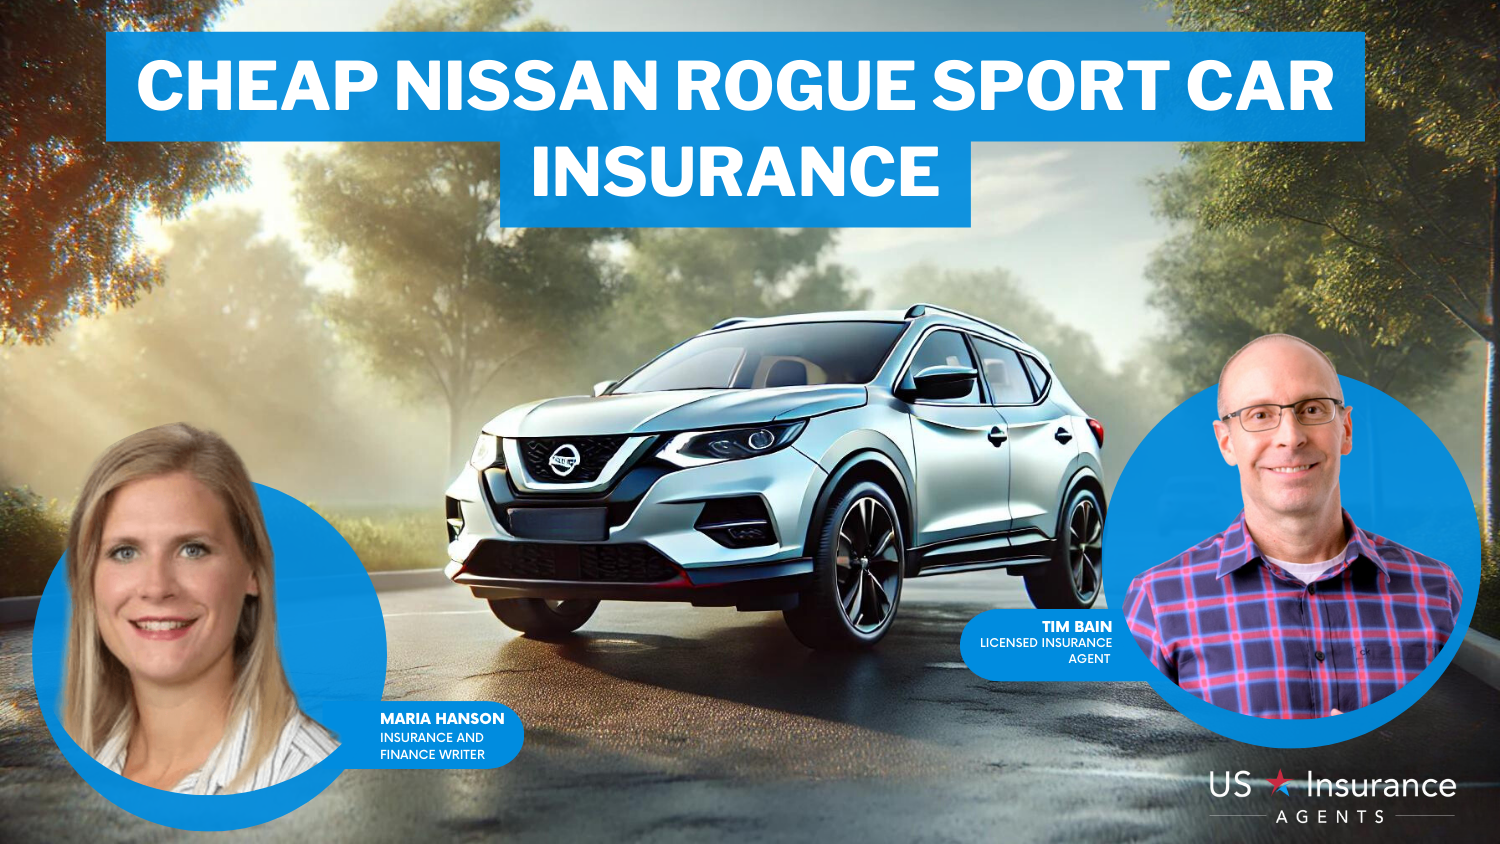 Cheap Nissan Rogue Sport Car Insurance: Progressive, State Farm, and Nationwide